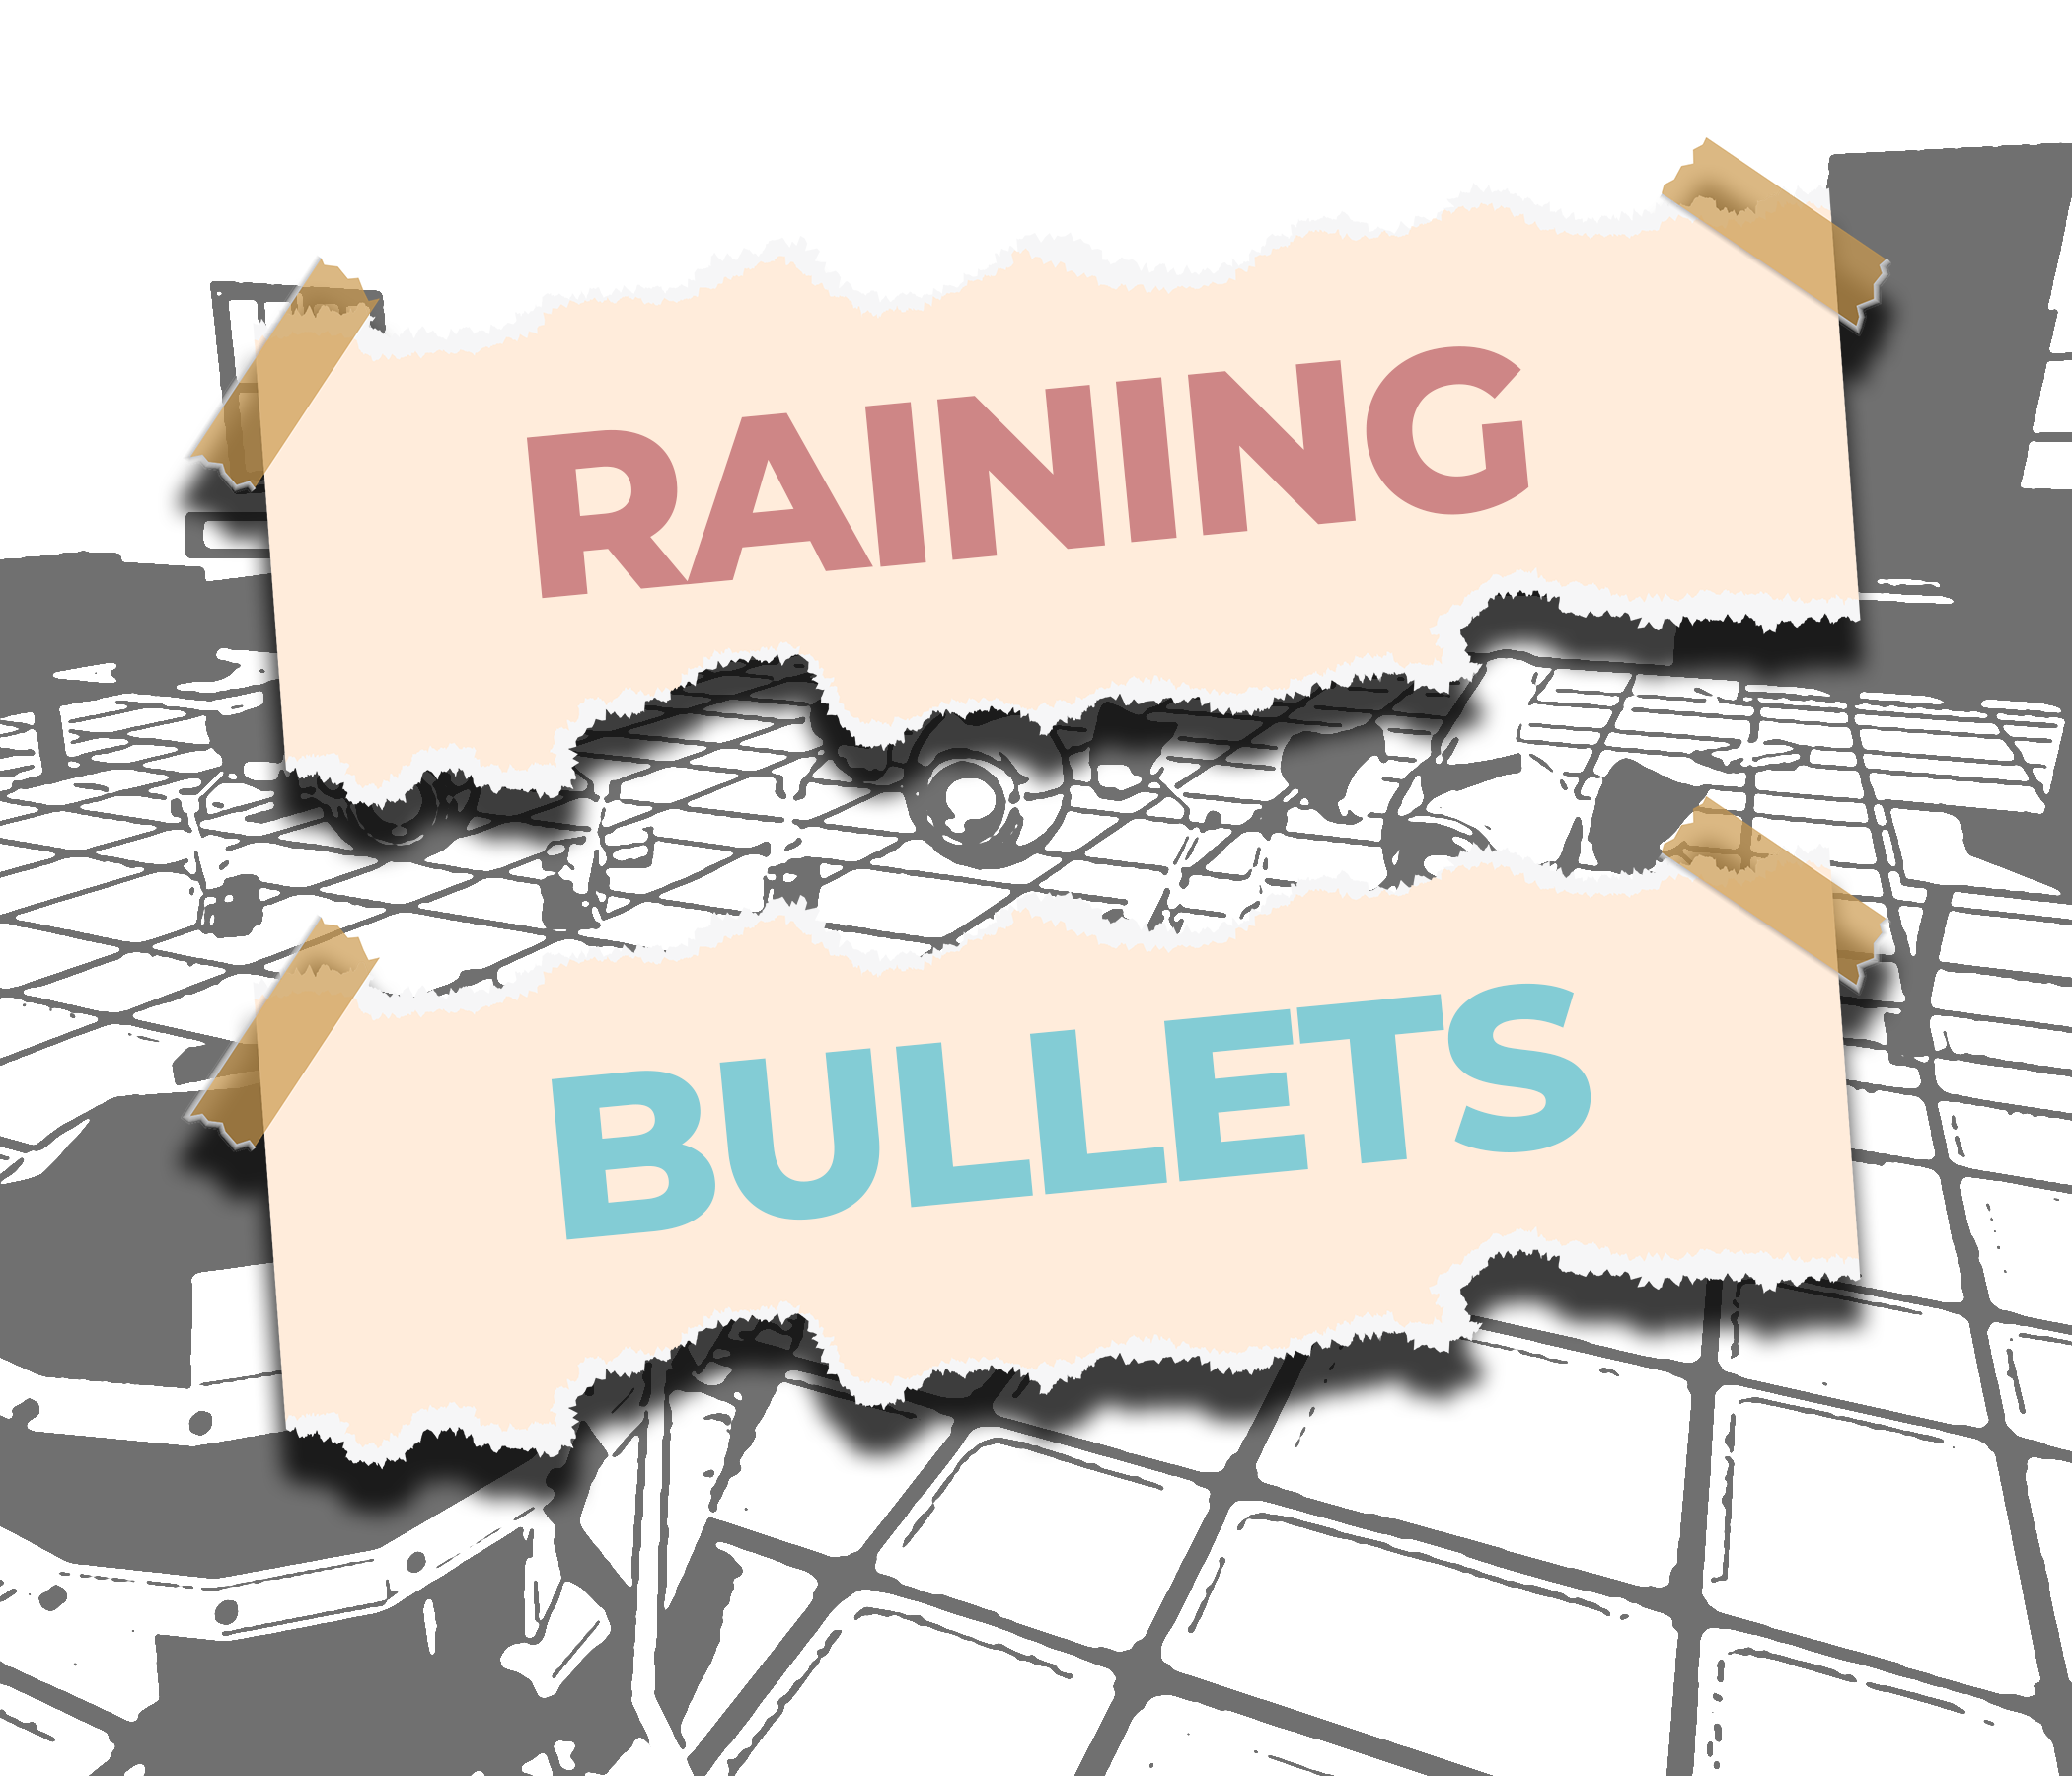 Raining Bullets: The Game